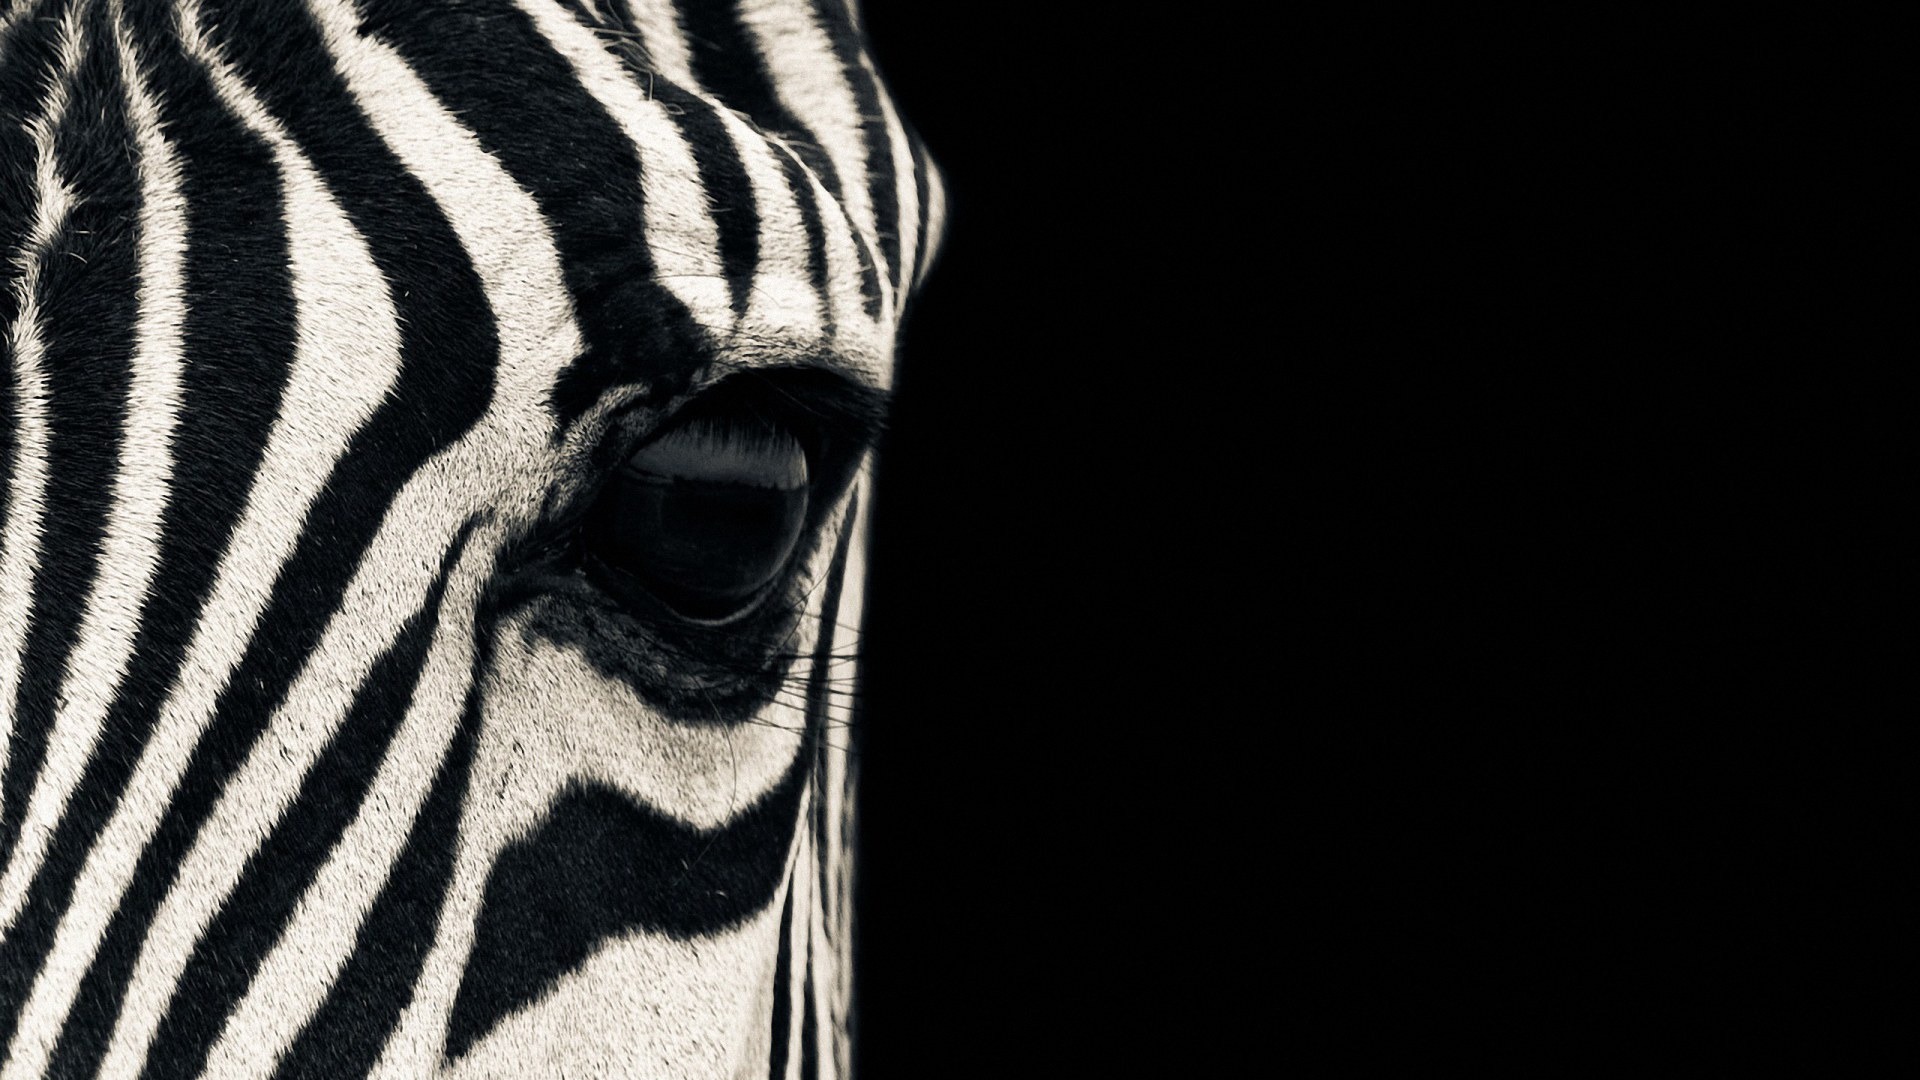 Zebra wallpapers Zebra stock photos